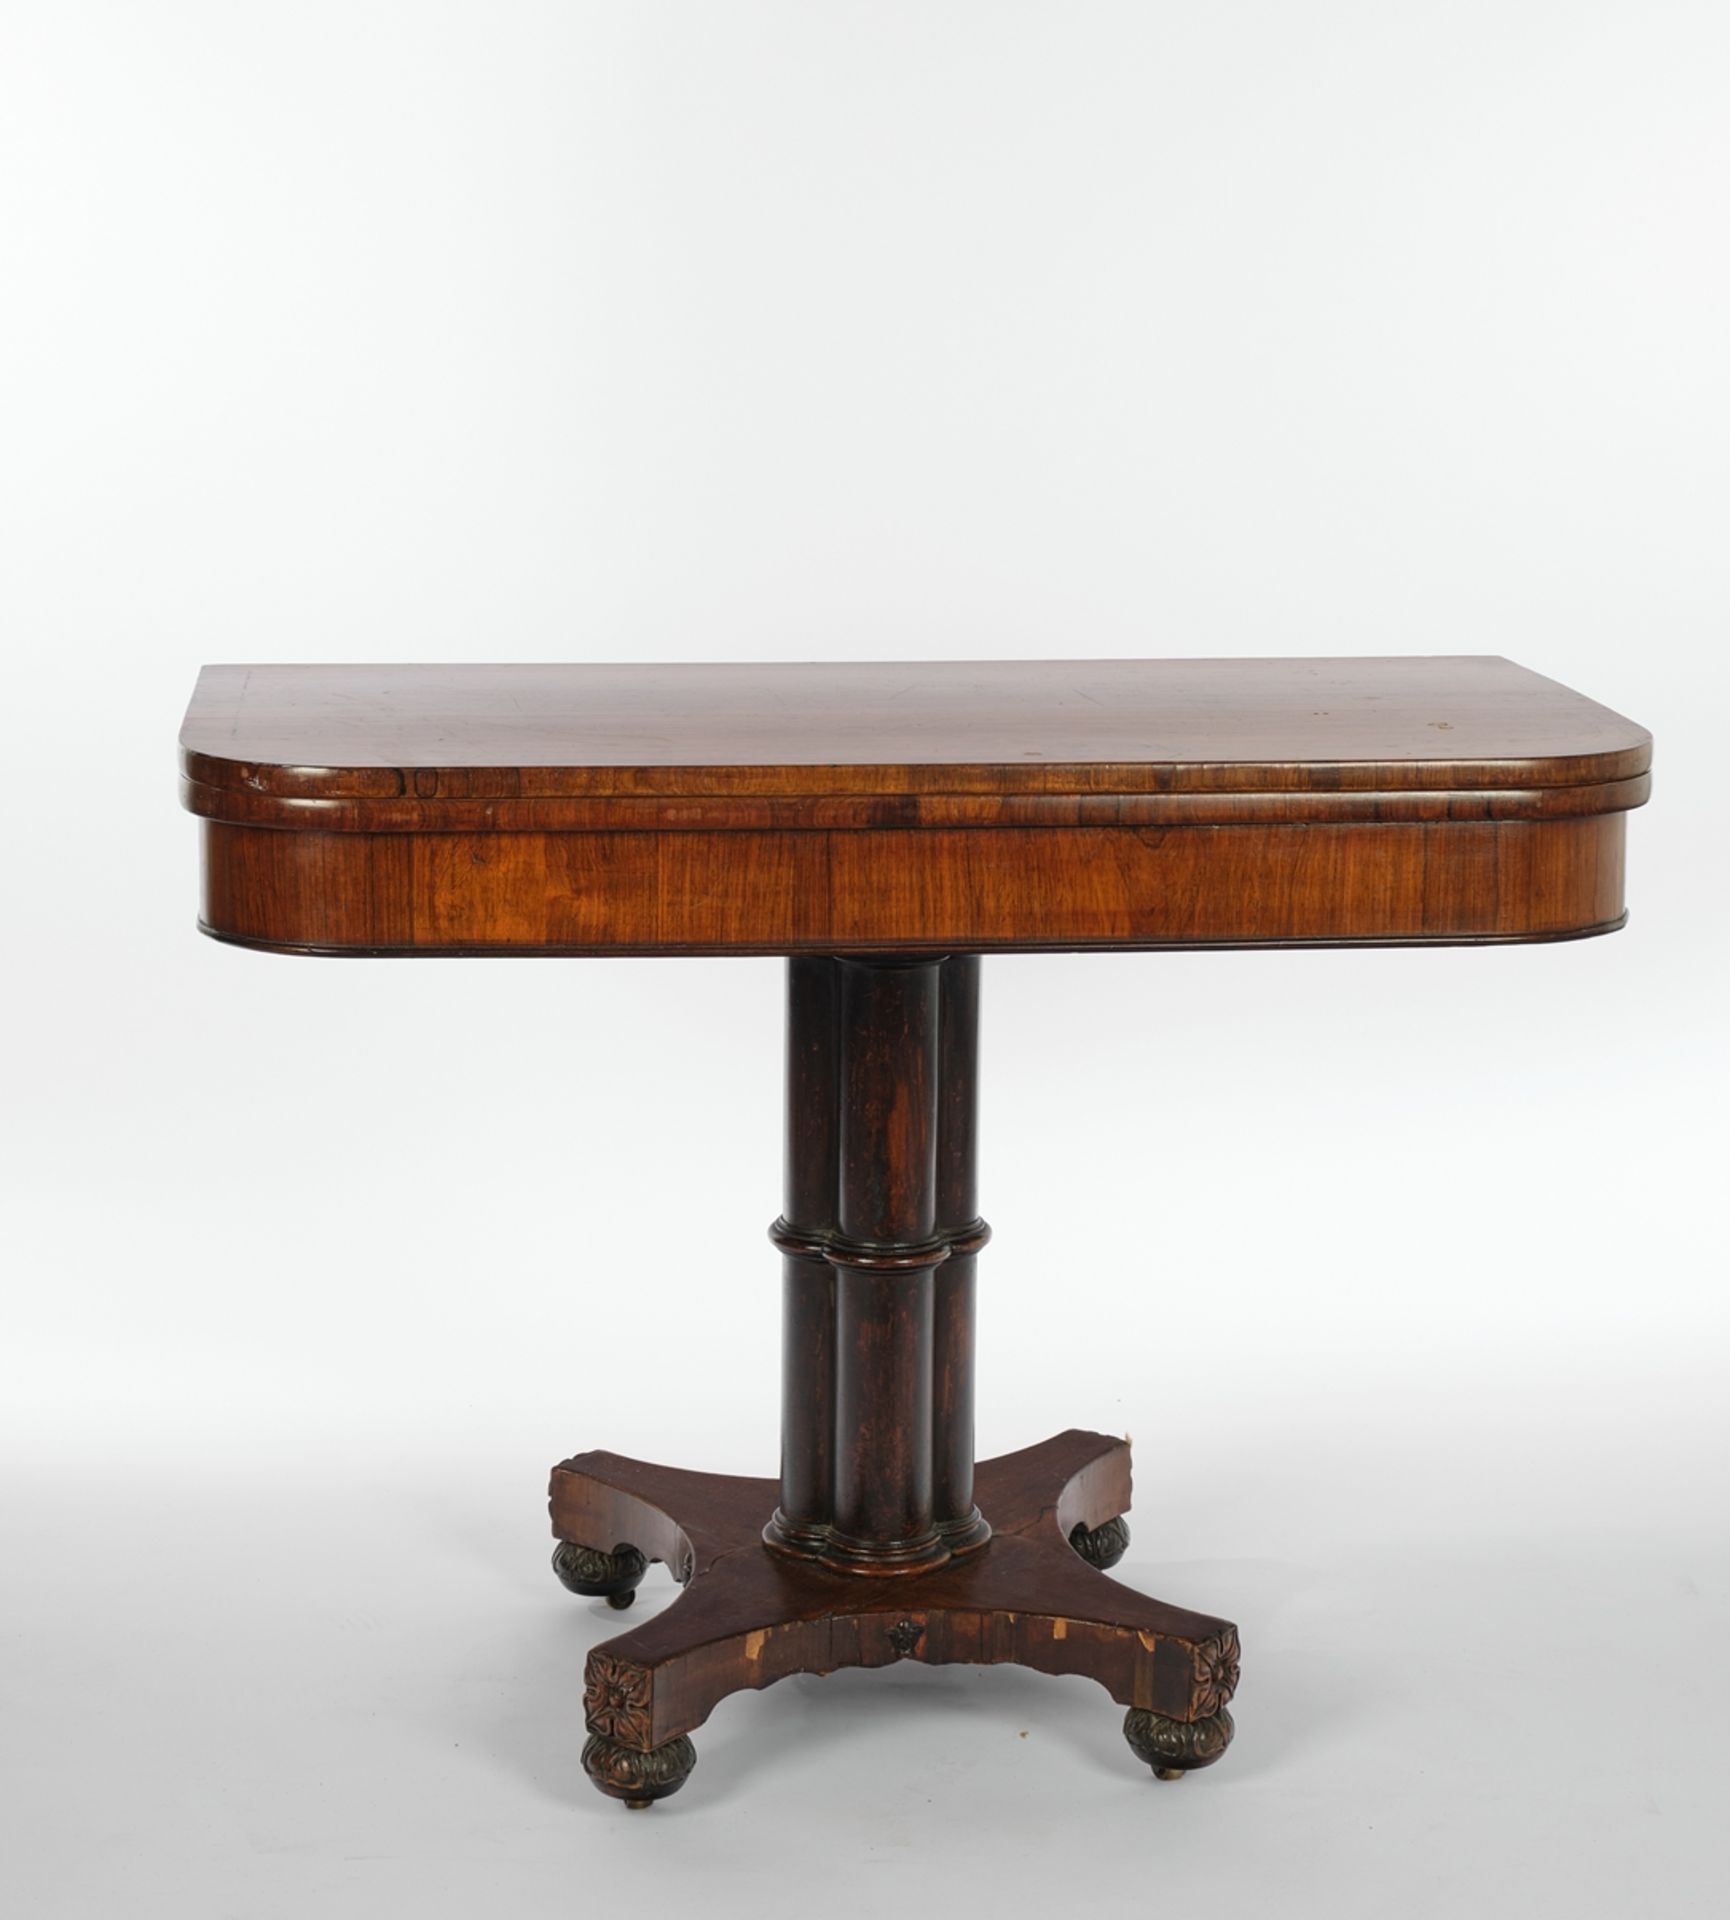 Spieltisch / Konsoltisch, Biedermeier, um 1830, Mahagoni furniert, Fadeneinlagen, rechteckige Platt - Image 2 of 4